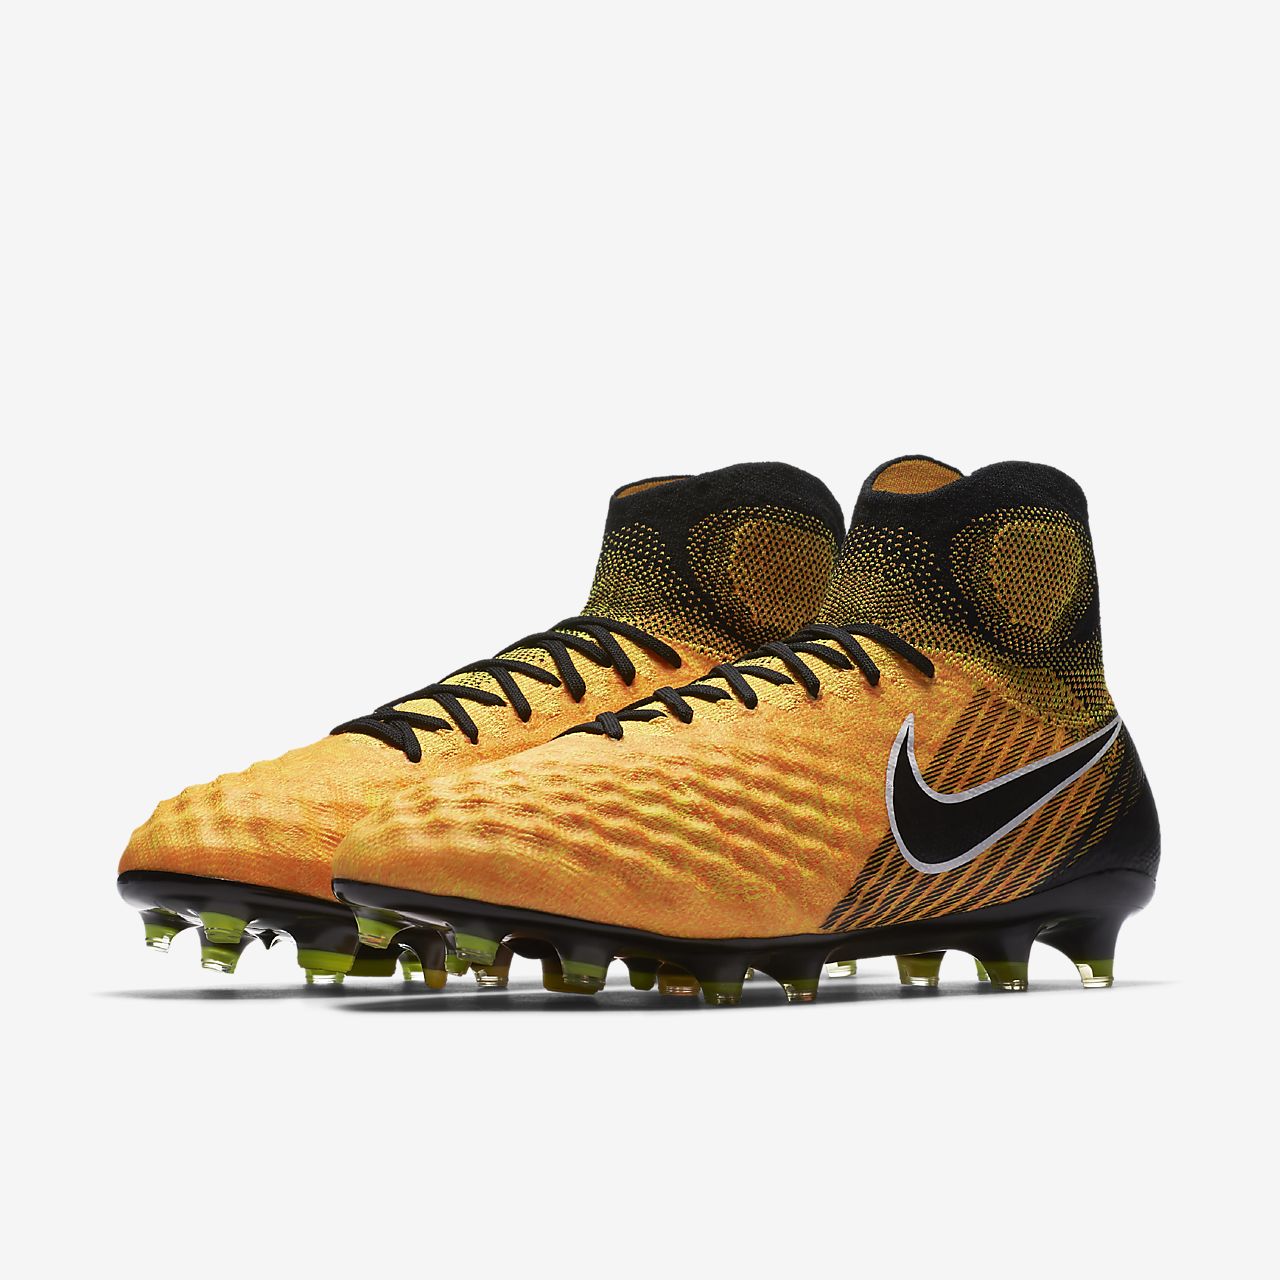 Nike Magista Obra II Pro DF FG Soccer Cleat (ah7308 080